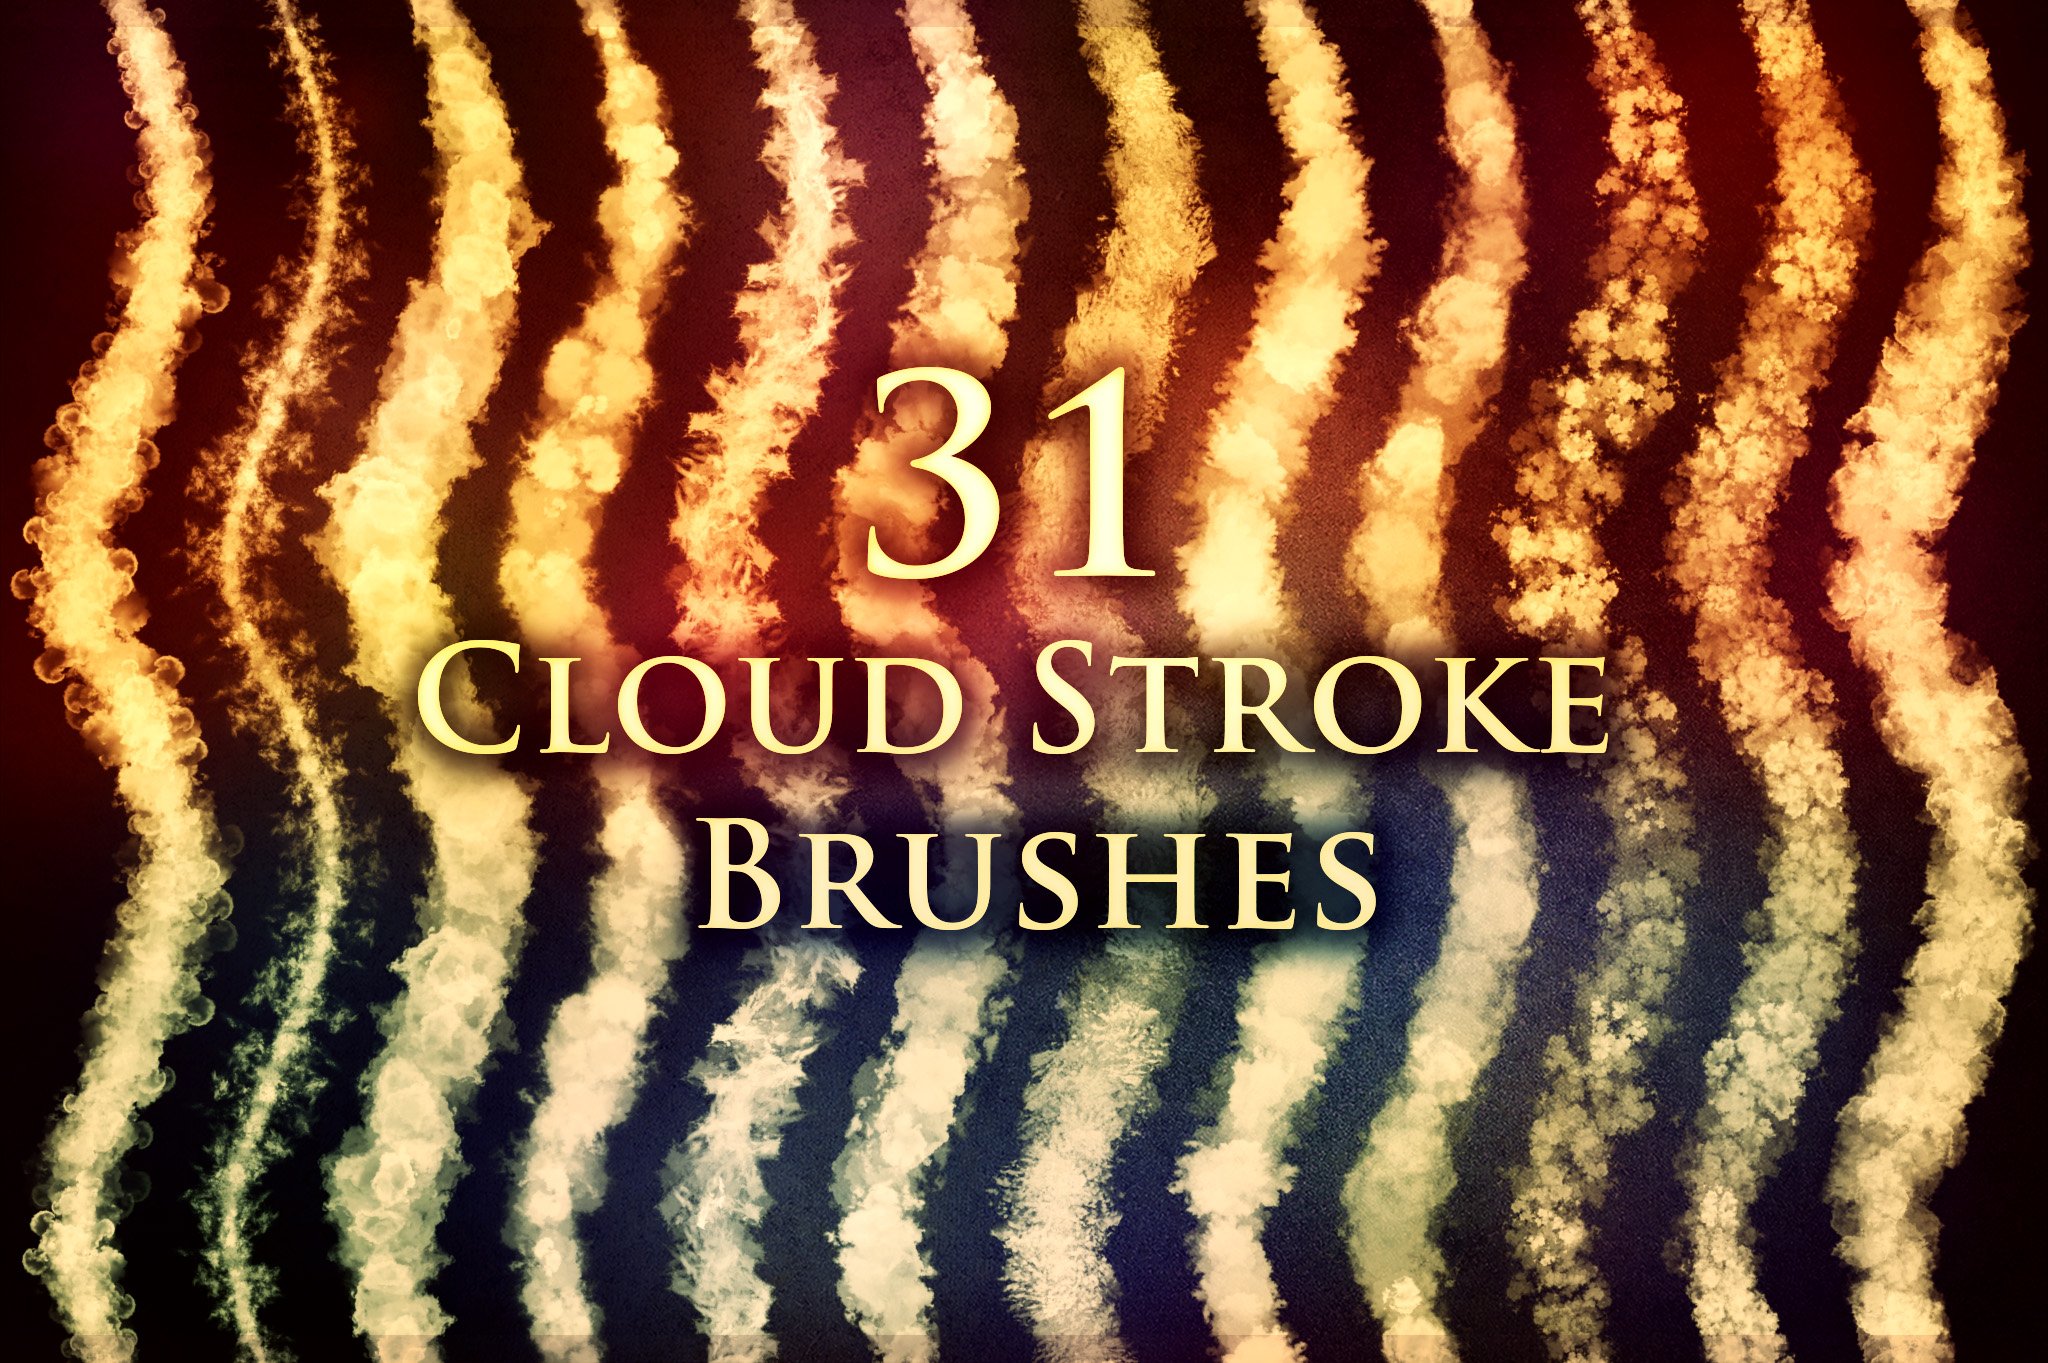 31 Cloud Stroke Brushescover image.